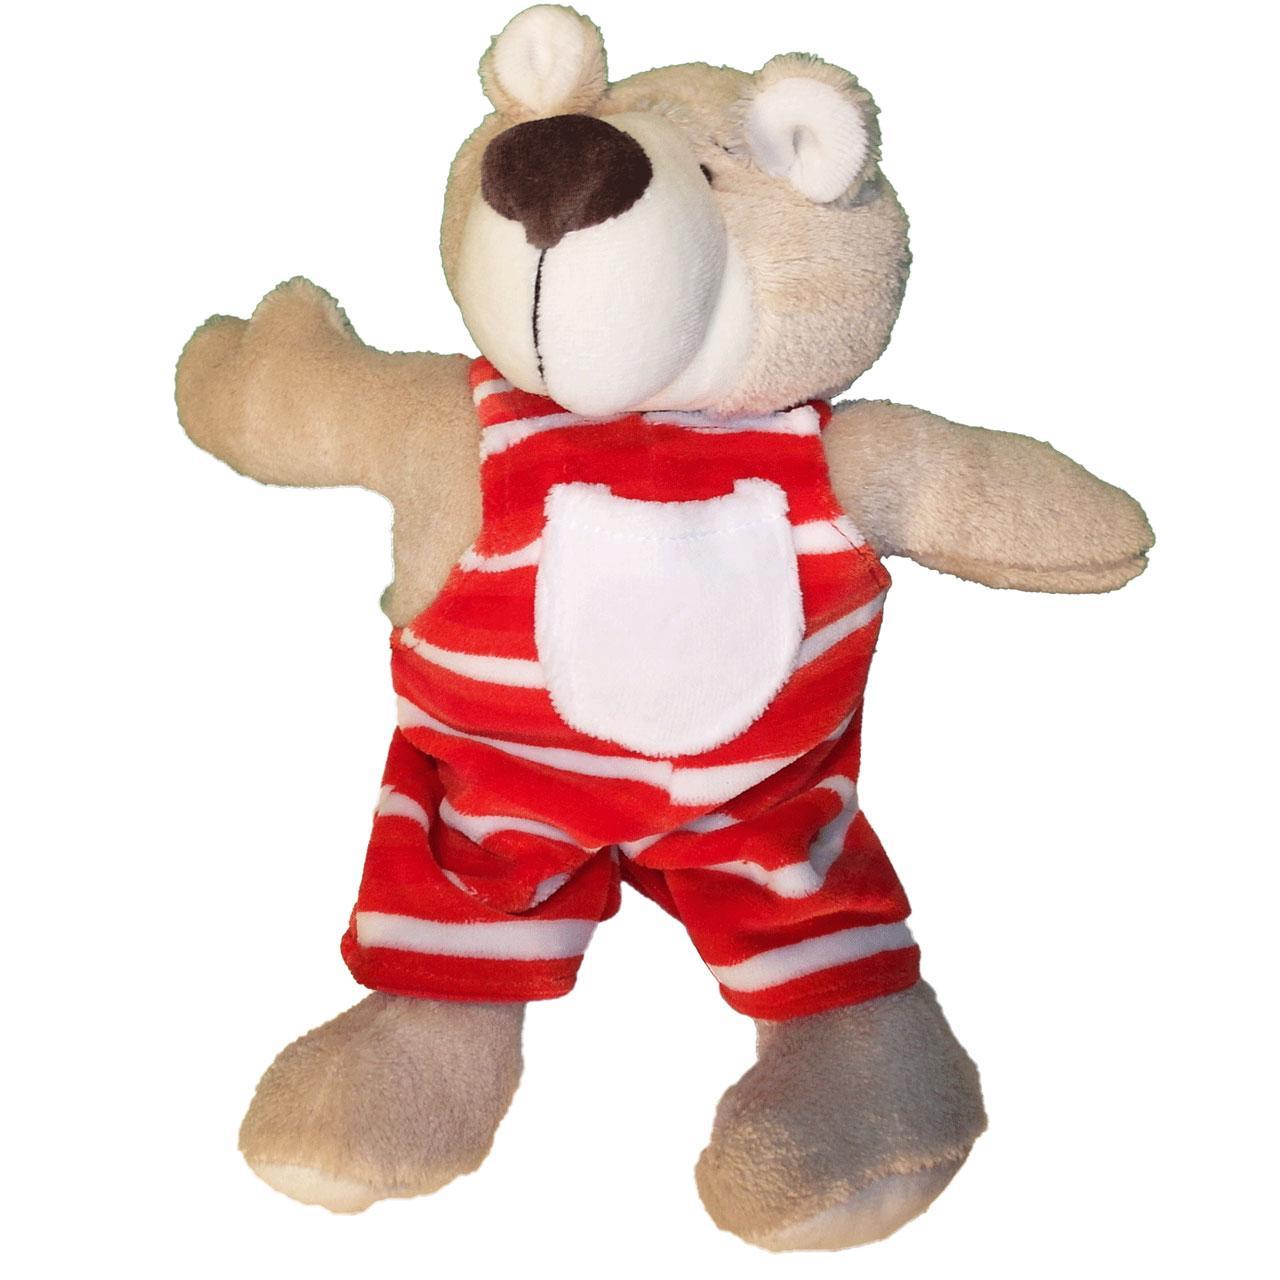 Cuddly toy bear light brown